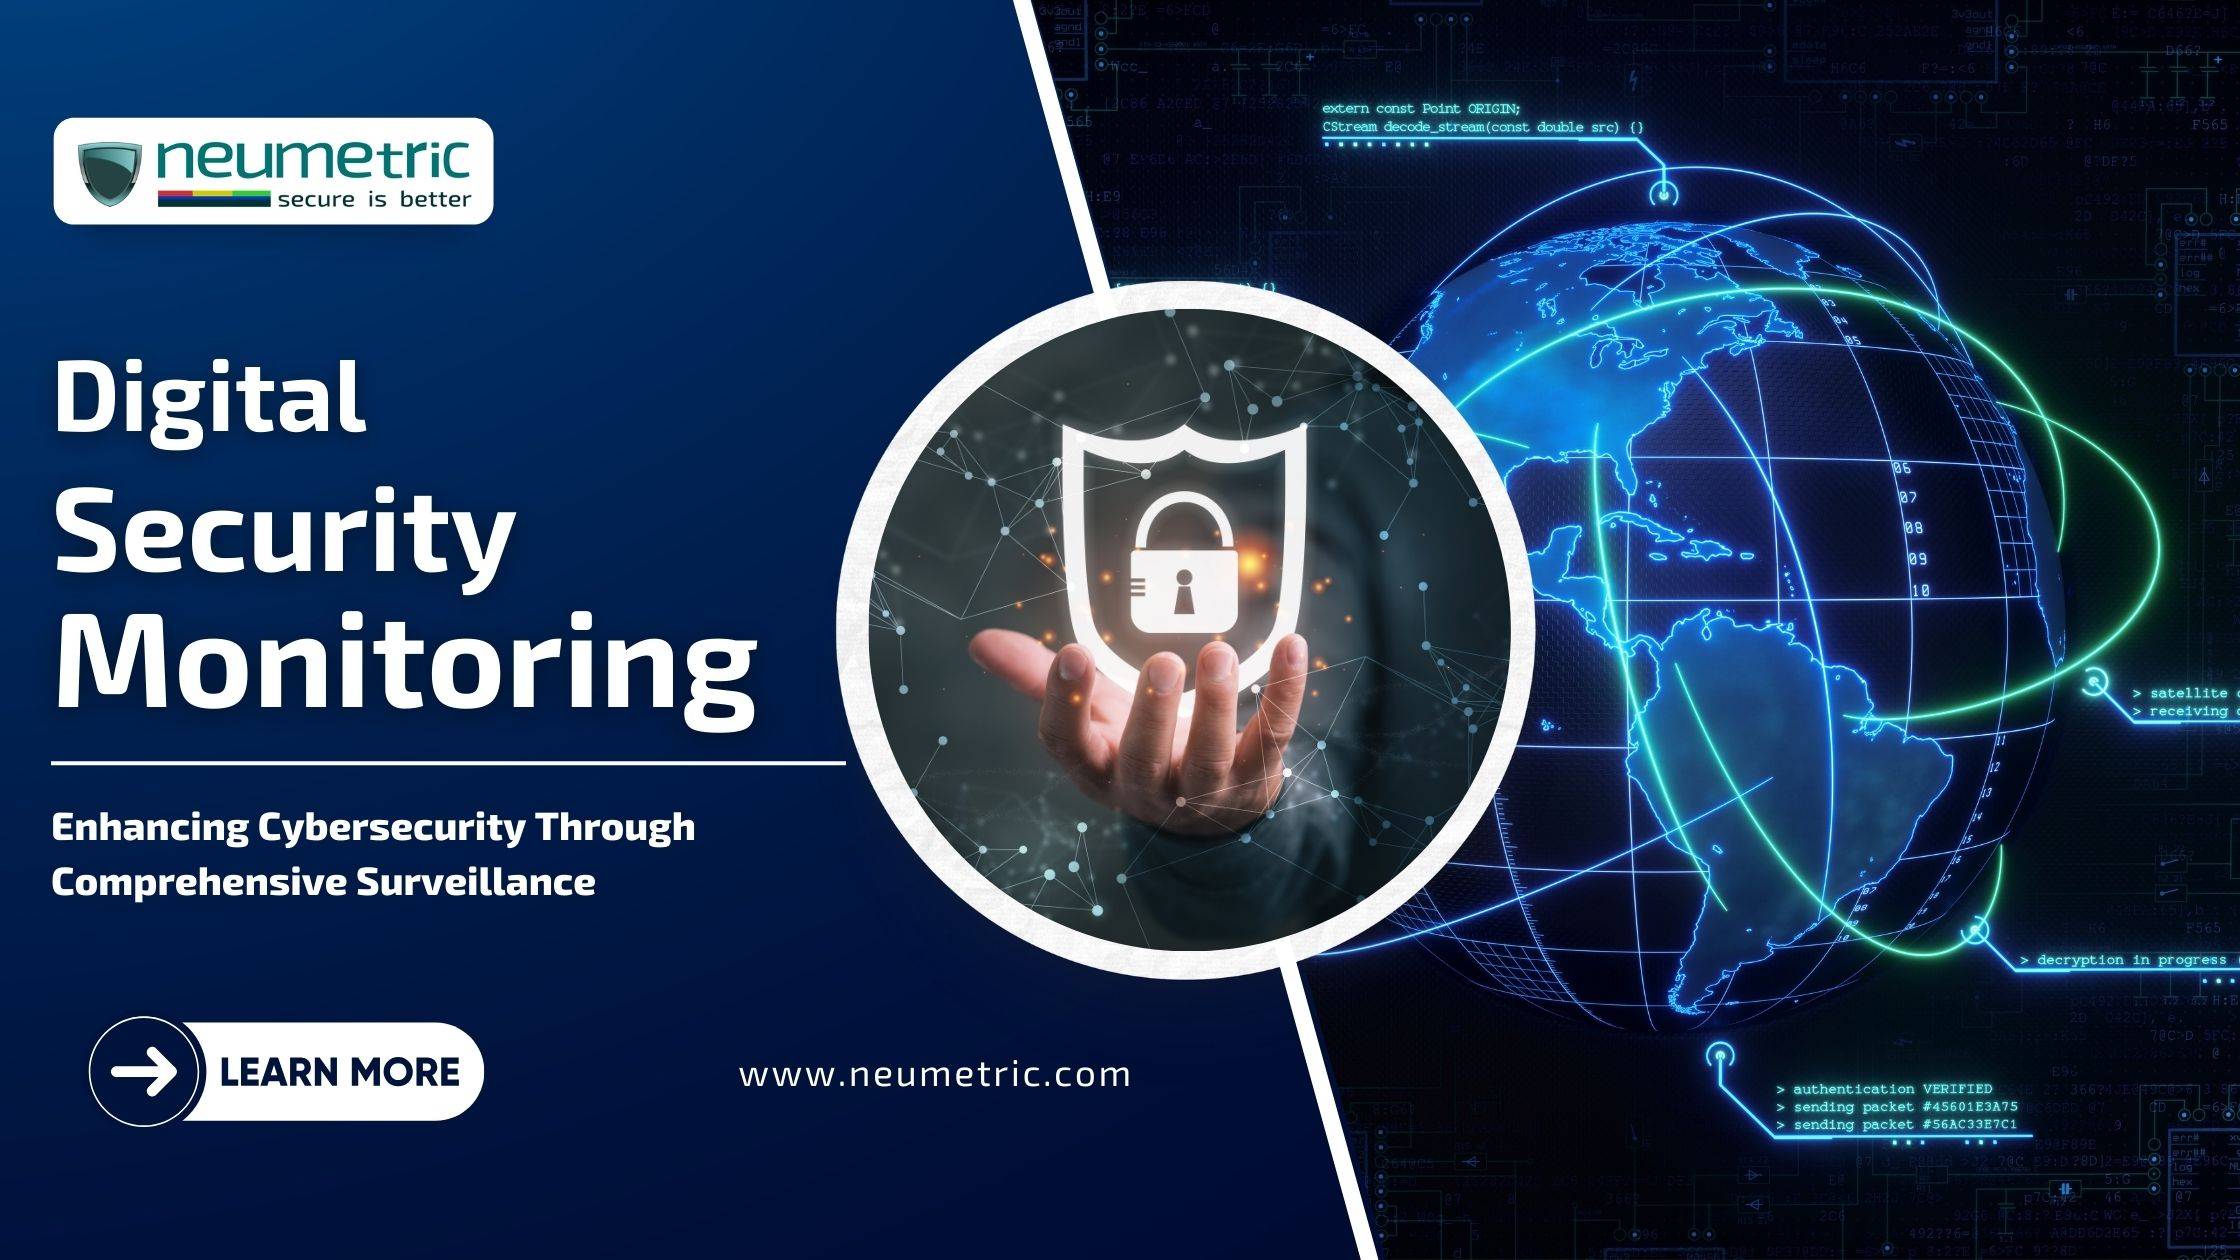 Digital security monitoring: Enhancing cybersecurity through comprehensive surveillance